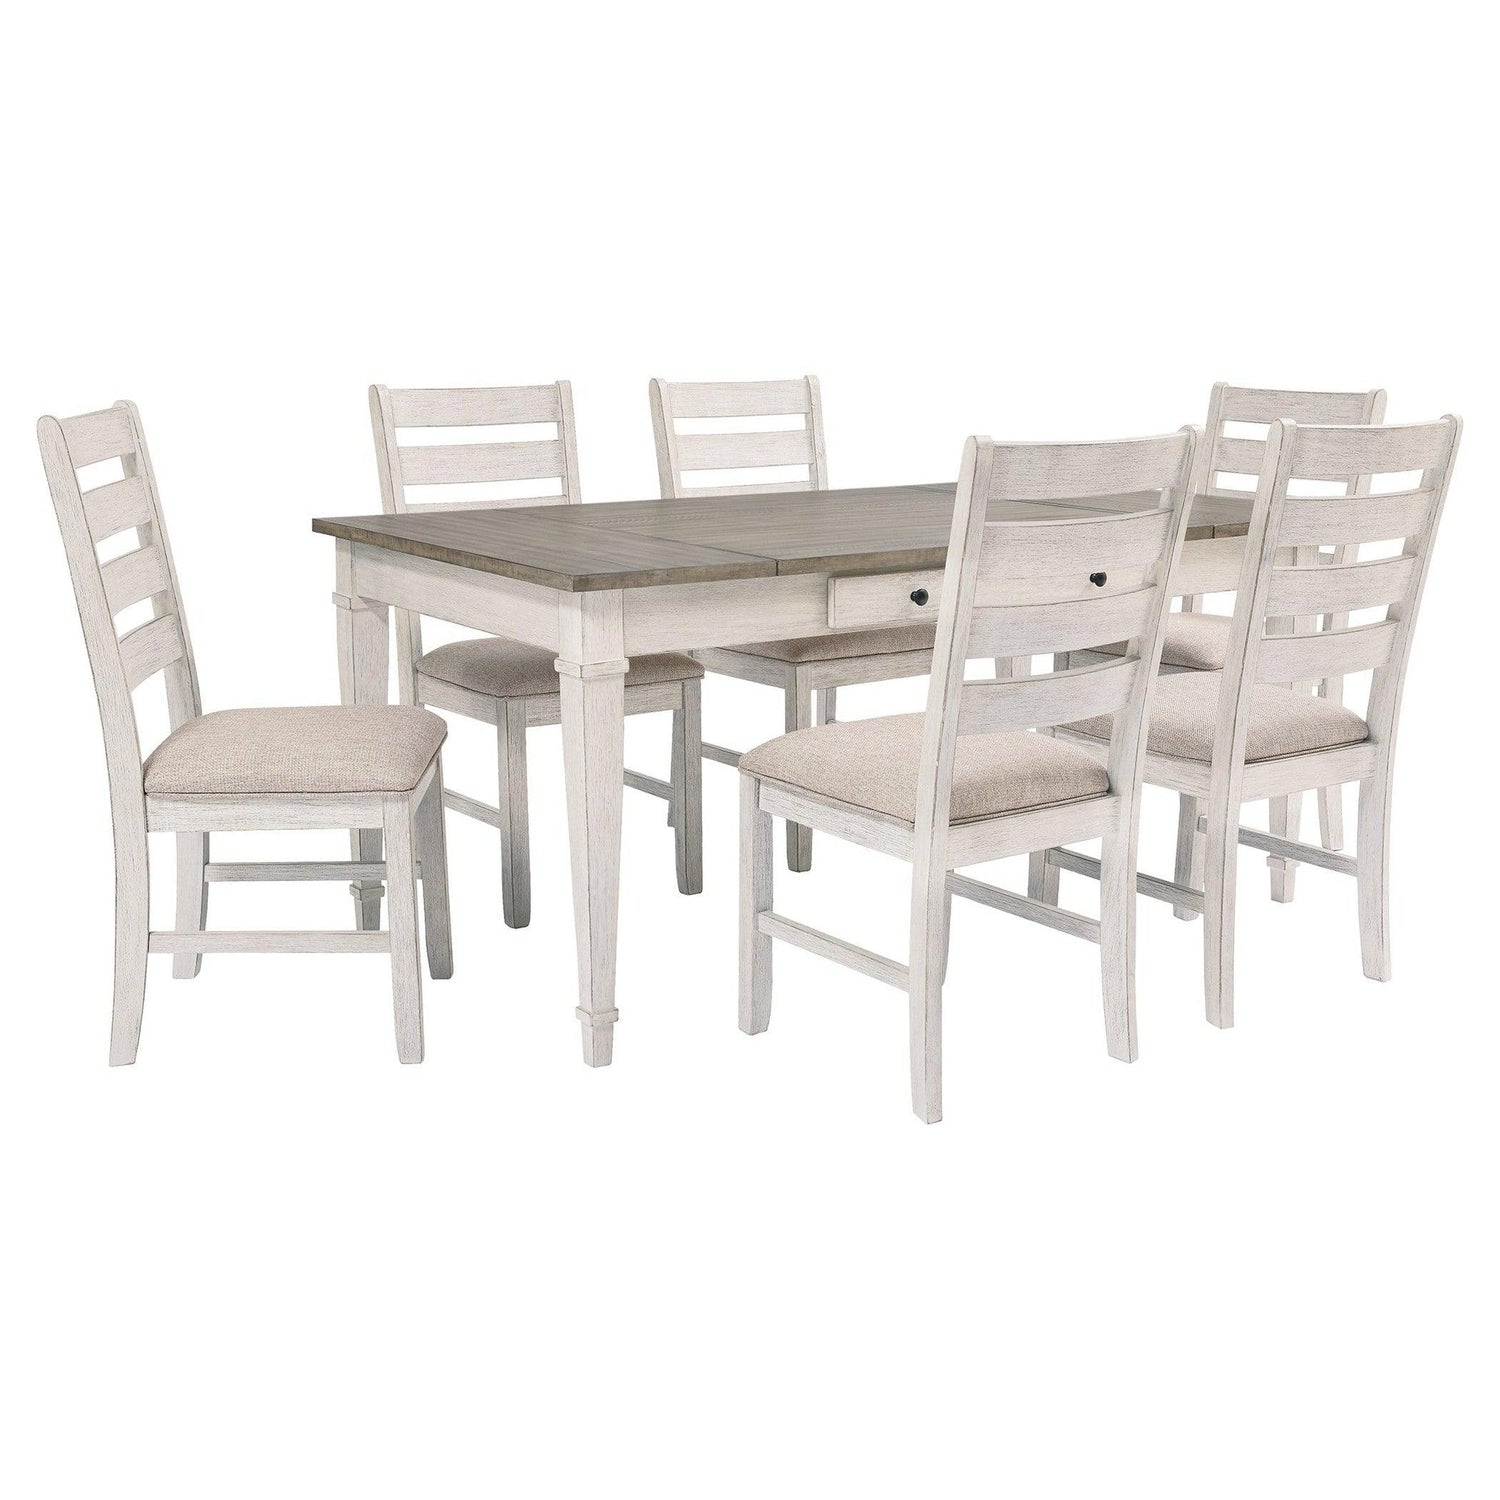 Skempton Dining Table Ash-D394-25